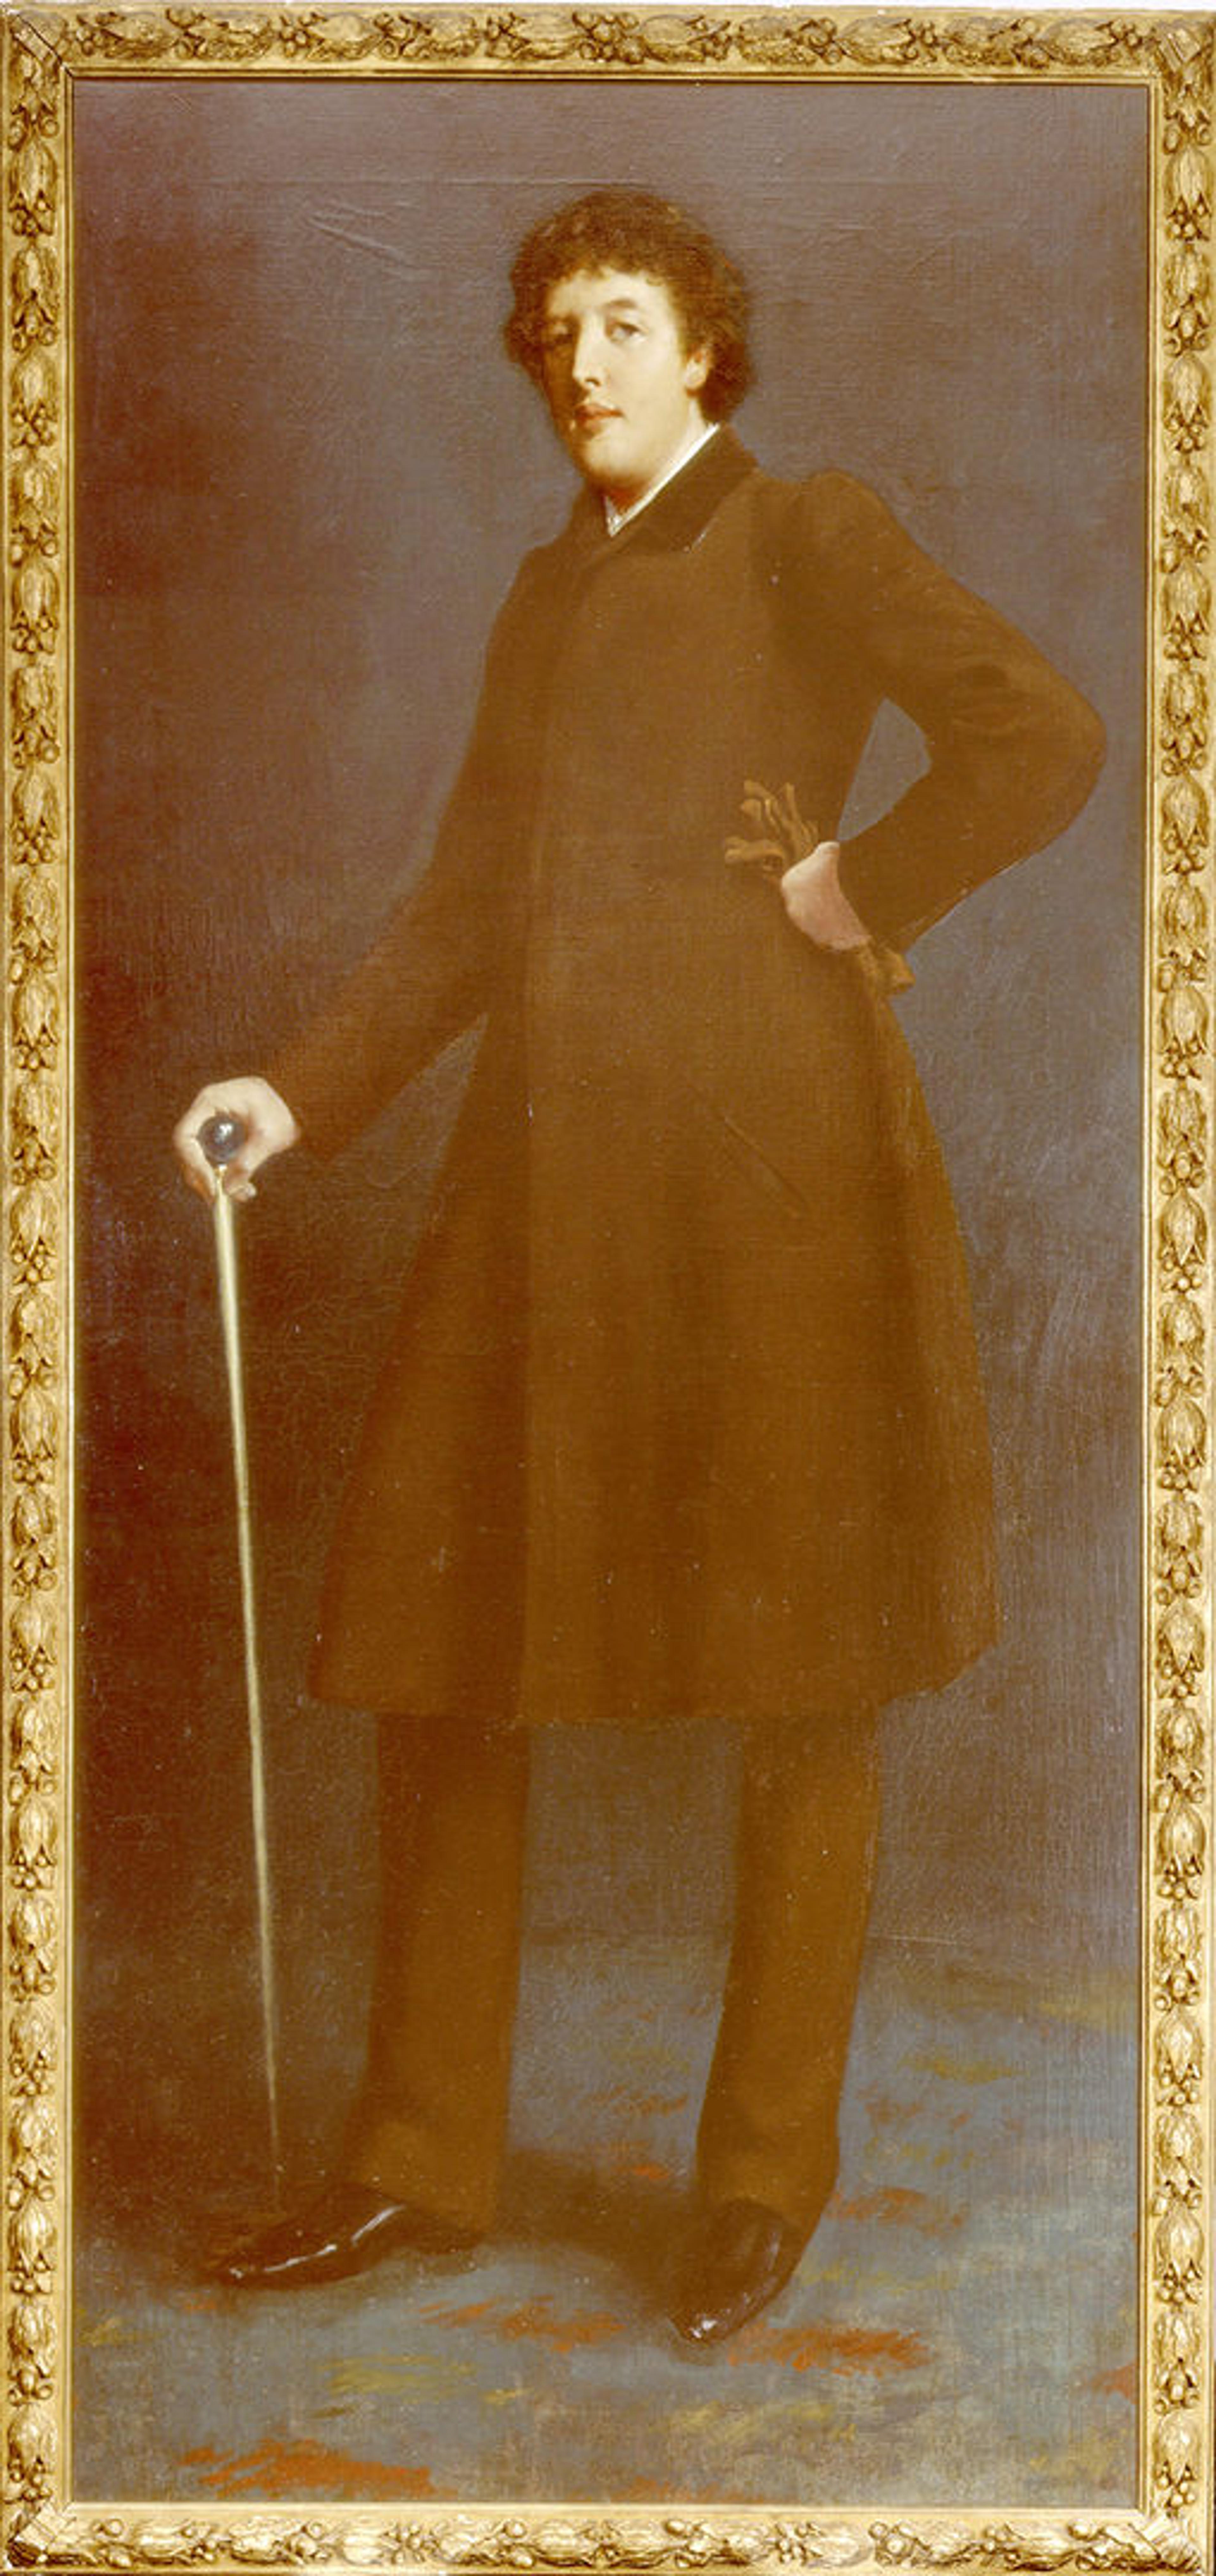 Photograph of Oscar Wilde by Harper Pennington